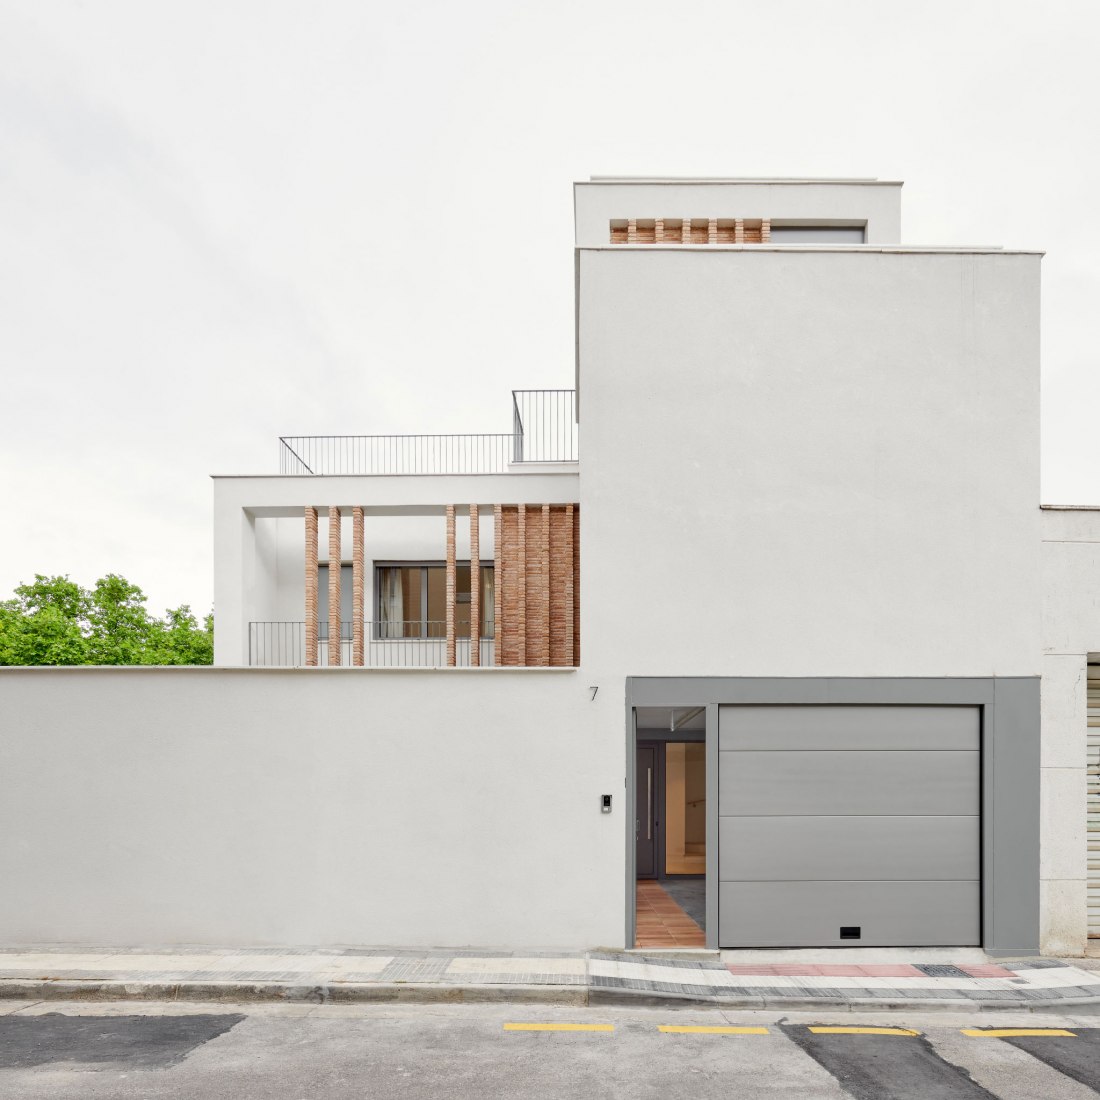 Mitmac House by DANA Arquitectos. Photograph by Iñaki Bergera.